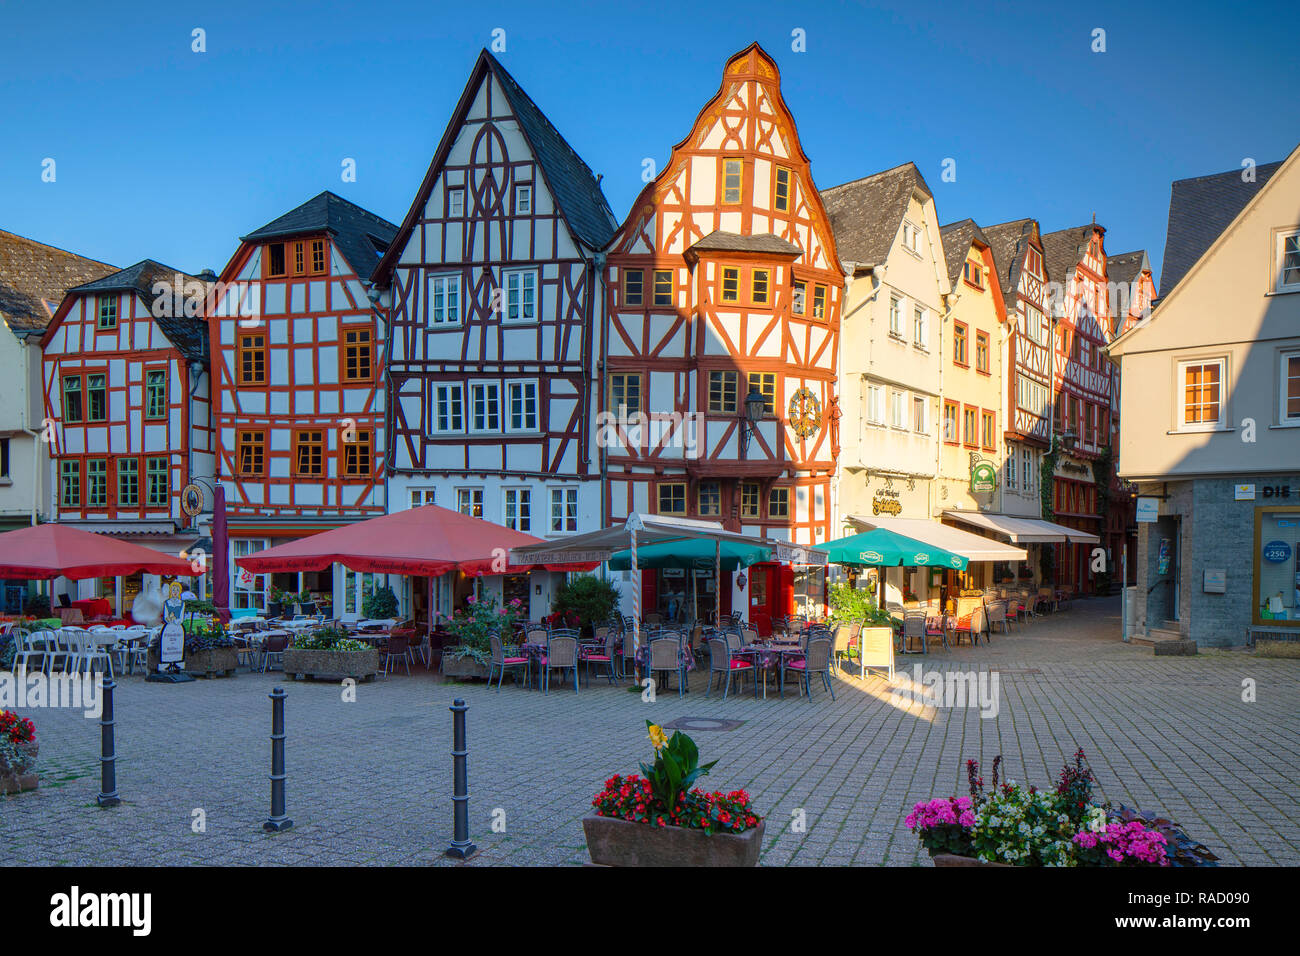 Half-timbered buildings in Bischofsplatz, Limburg (Limburg an der Lahn), Hesse, Germany, Europe Stock Photo